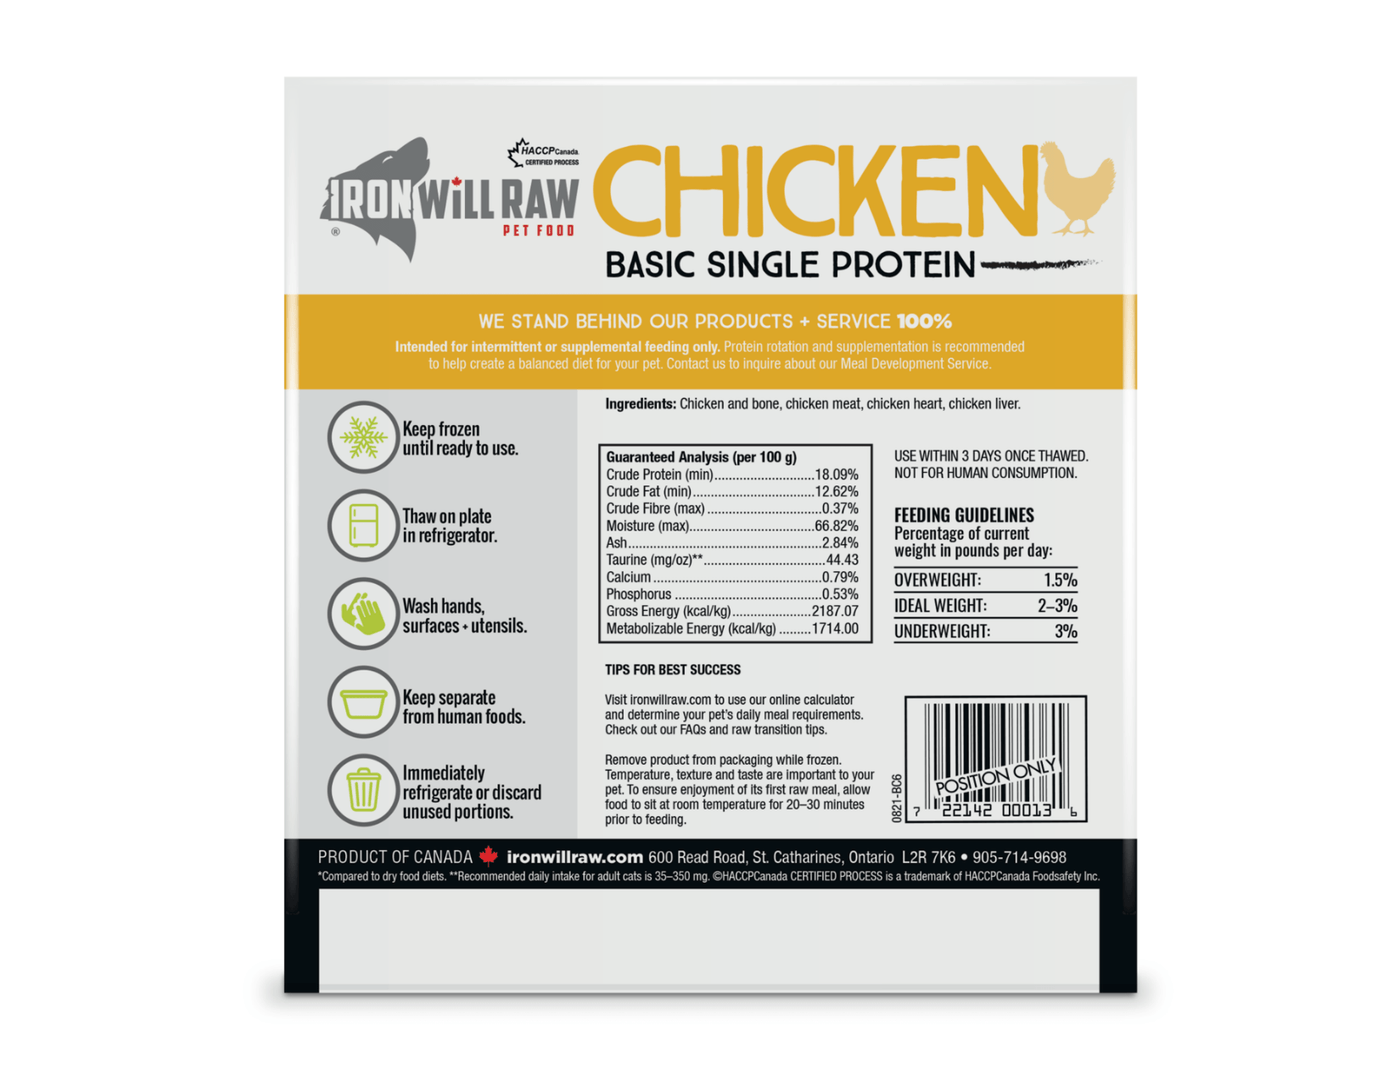 Basic Chicken 6 LB (6 X 1 LB Pouches) - Frozen Raw Dog & Cat Food - Iron Will Raw - PetToba-Iron Will Raw